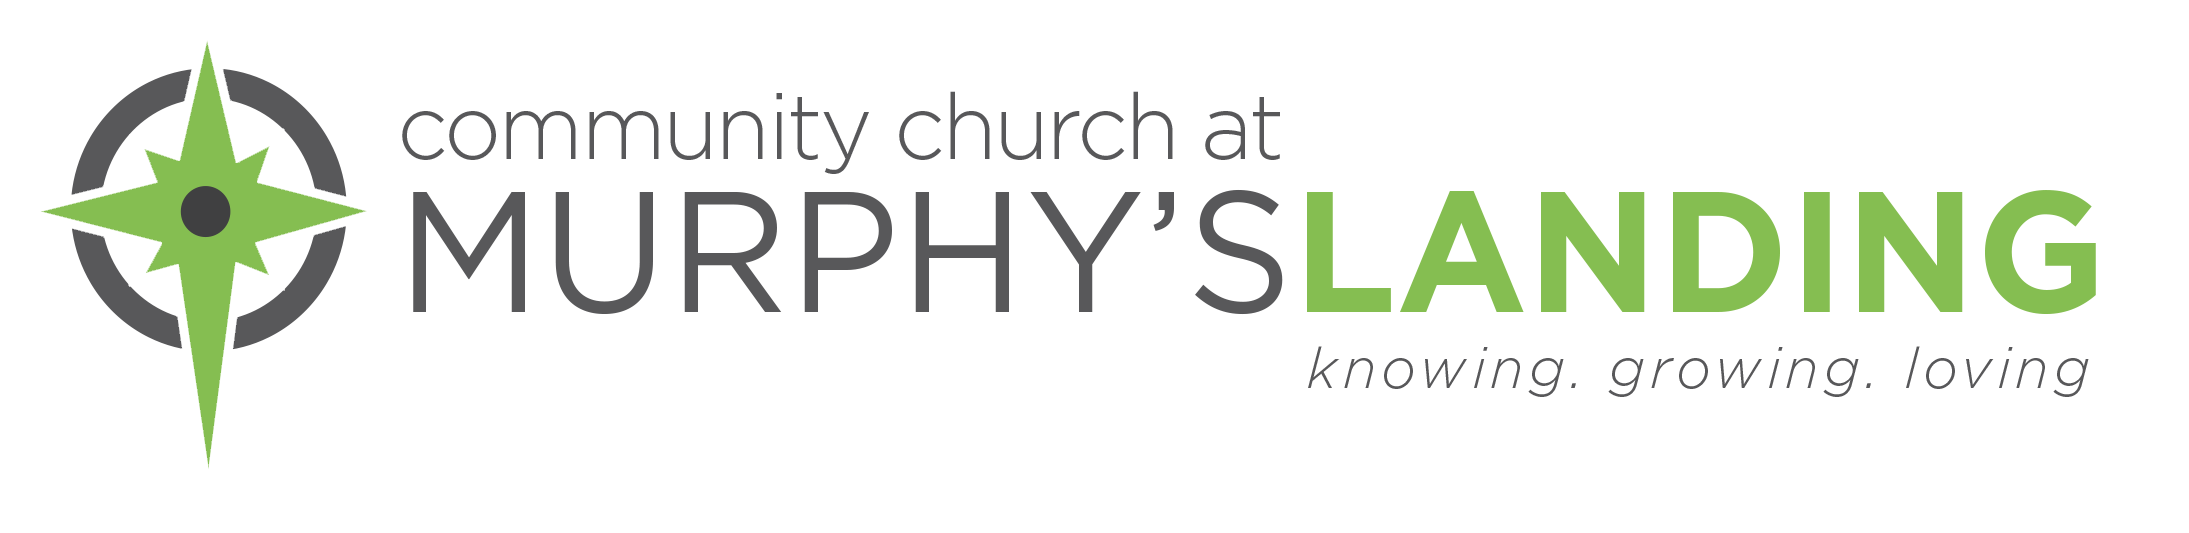 COMMUNITY CHURCH AT MURPHY'S LANDING